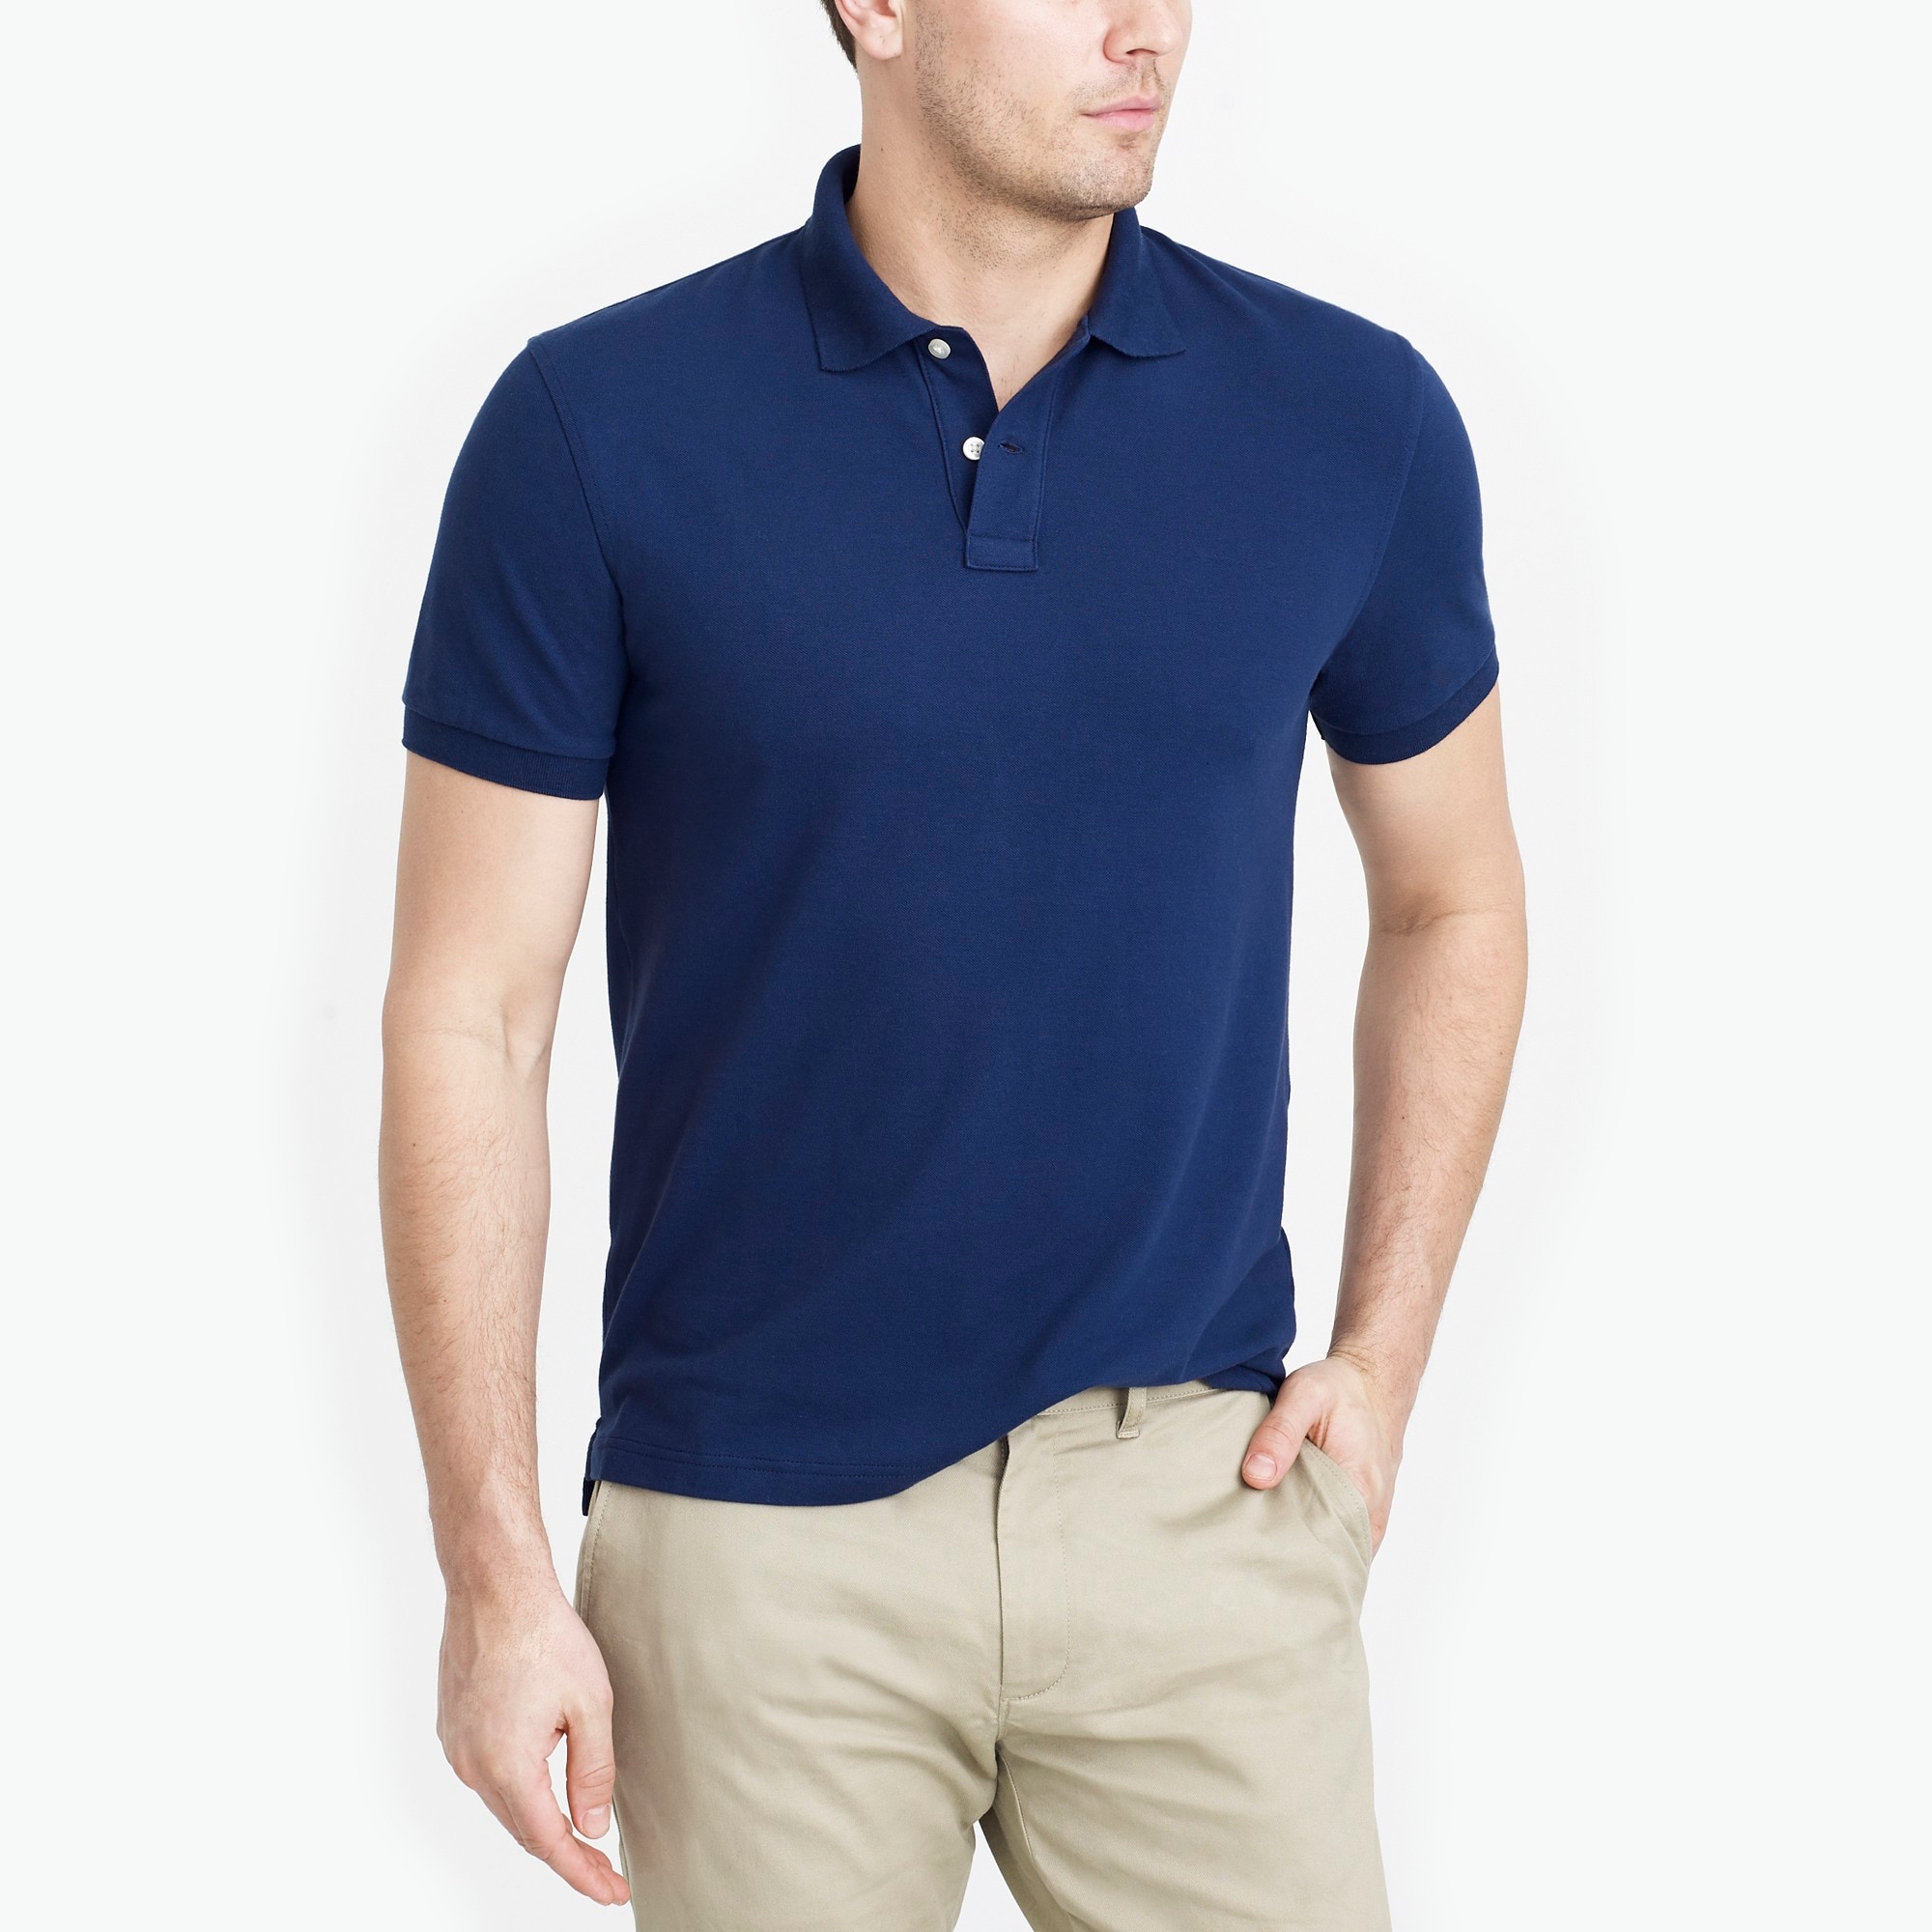 Men's Polo Shirts : Men's Shirts | J.Crew Factory